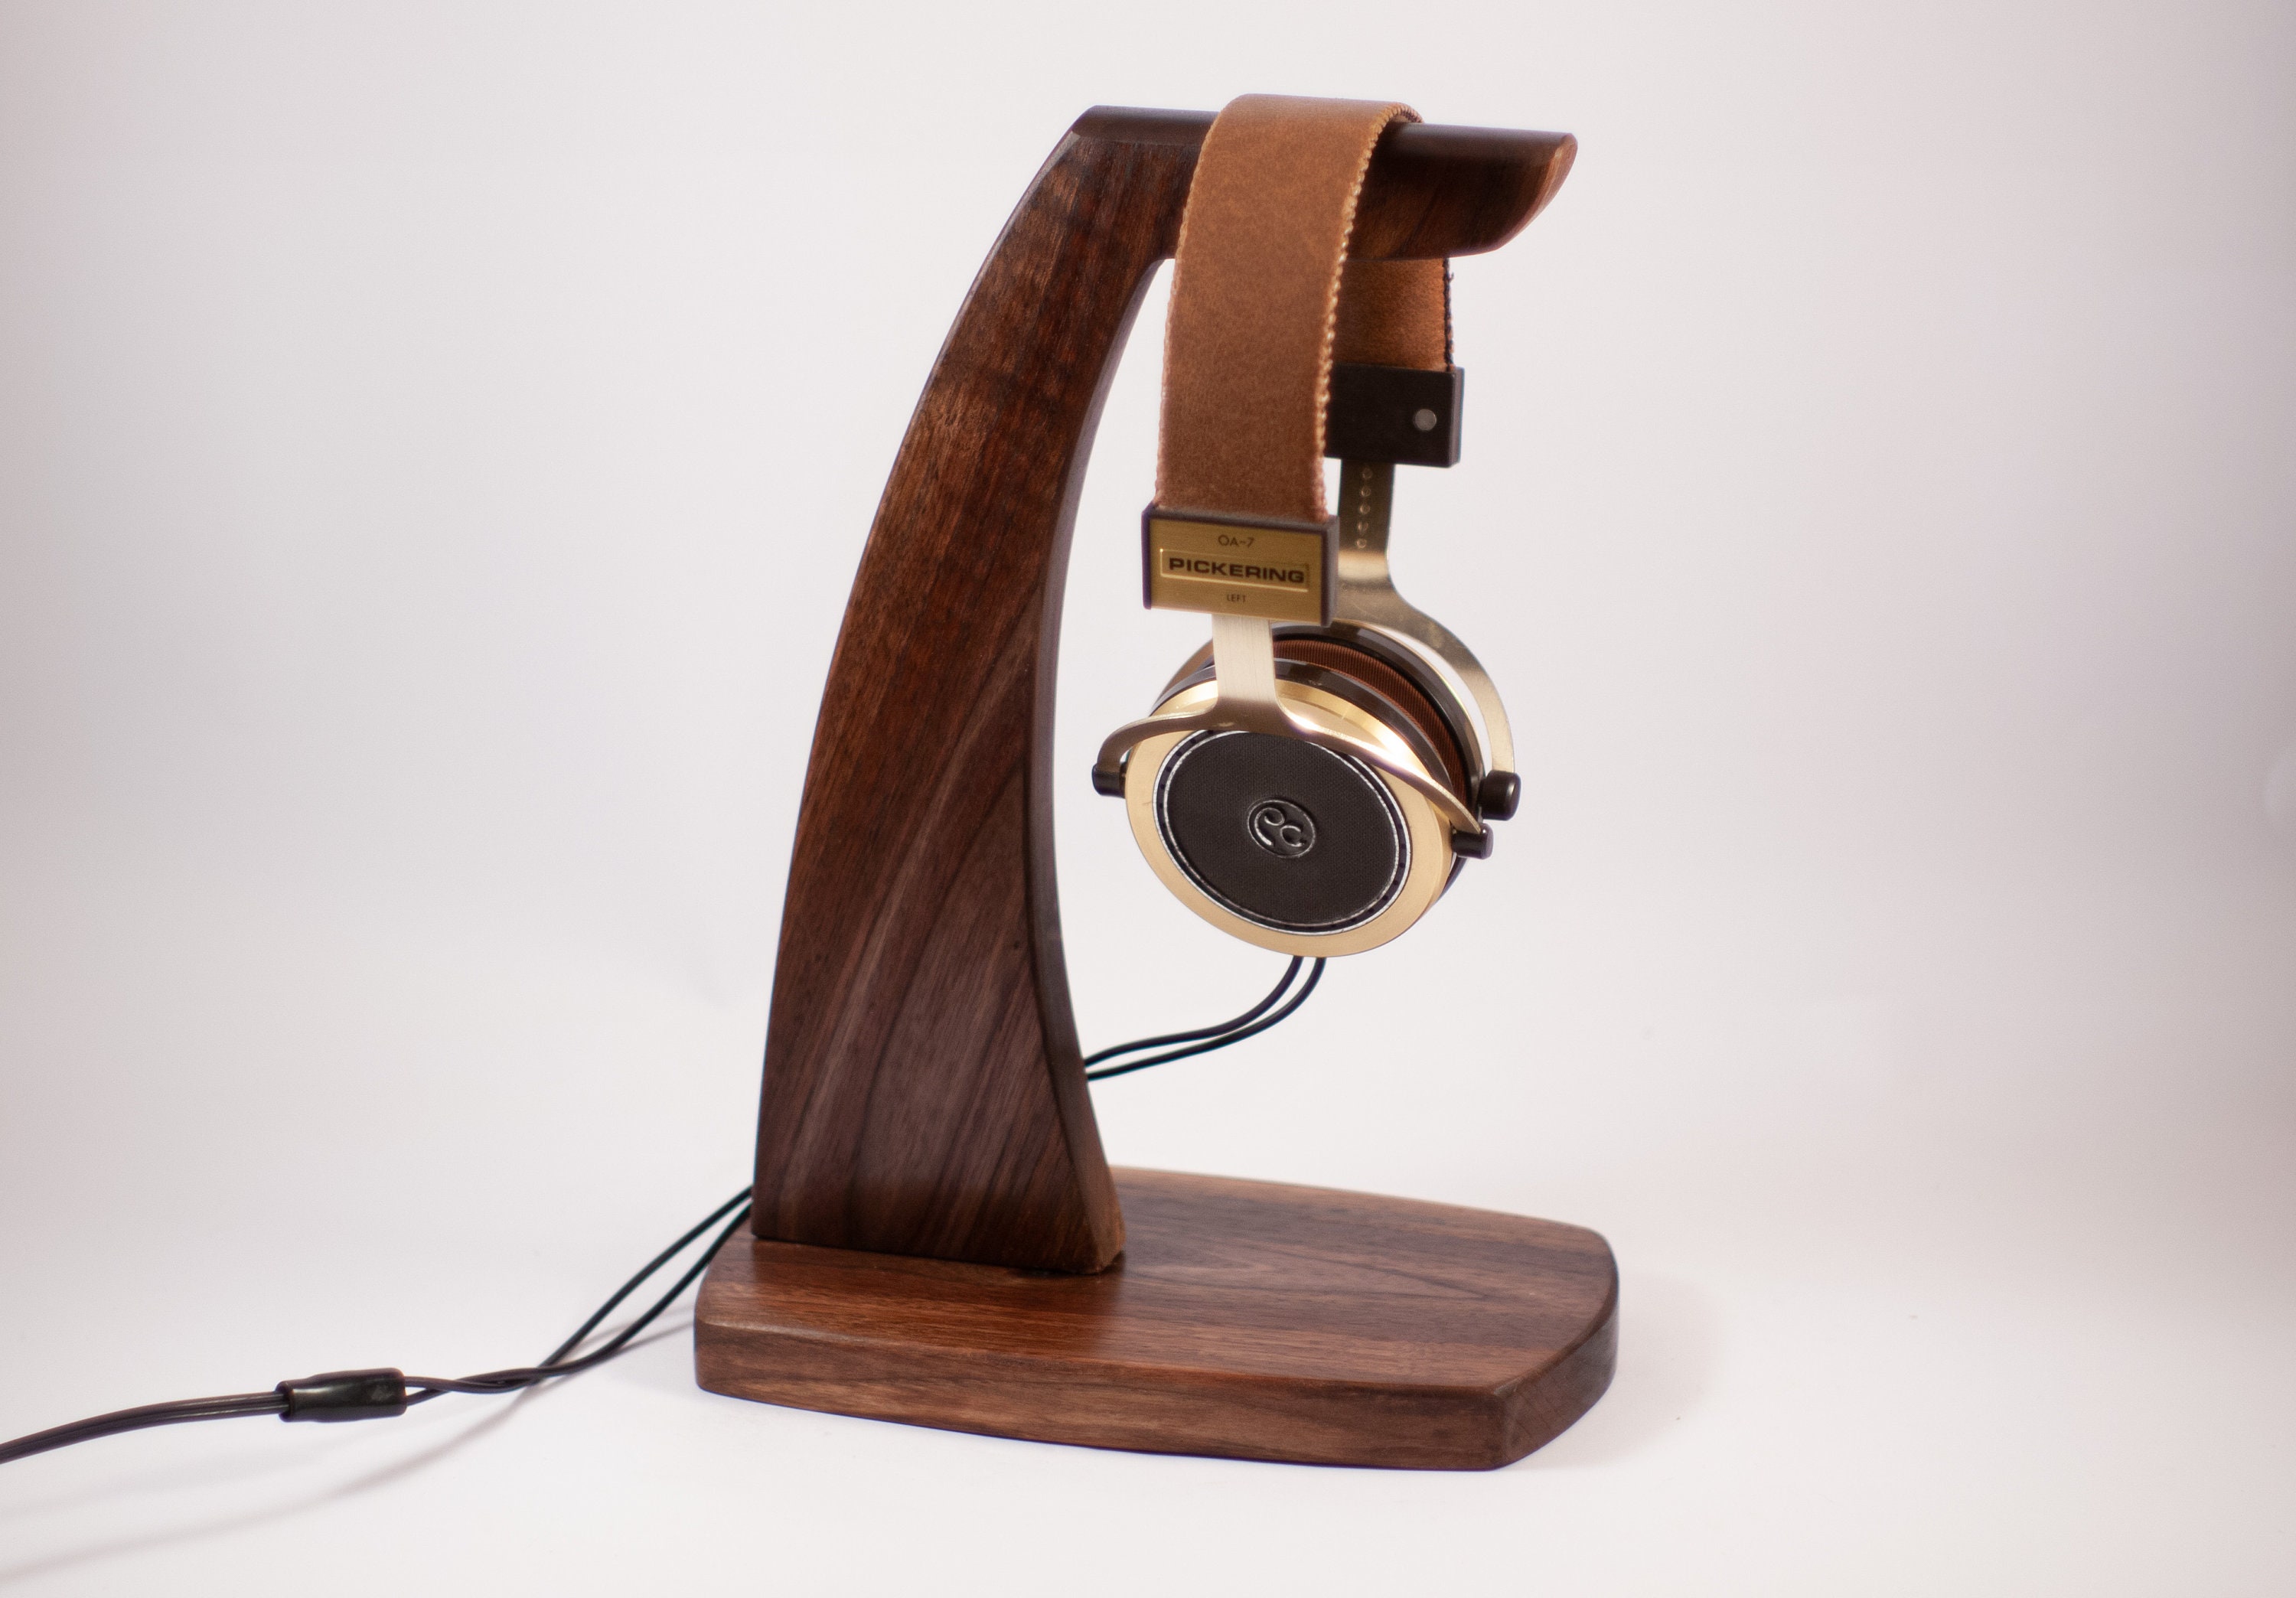 Wood Headphone Stand Wood Headset Stand Headphone Station Custom